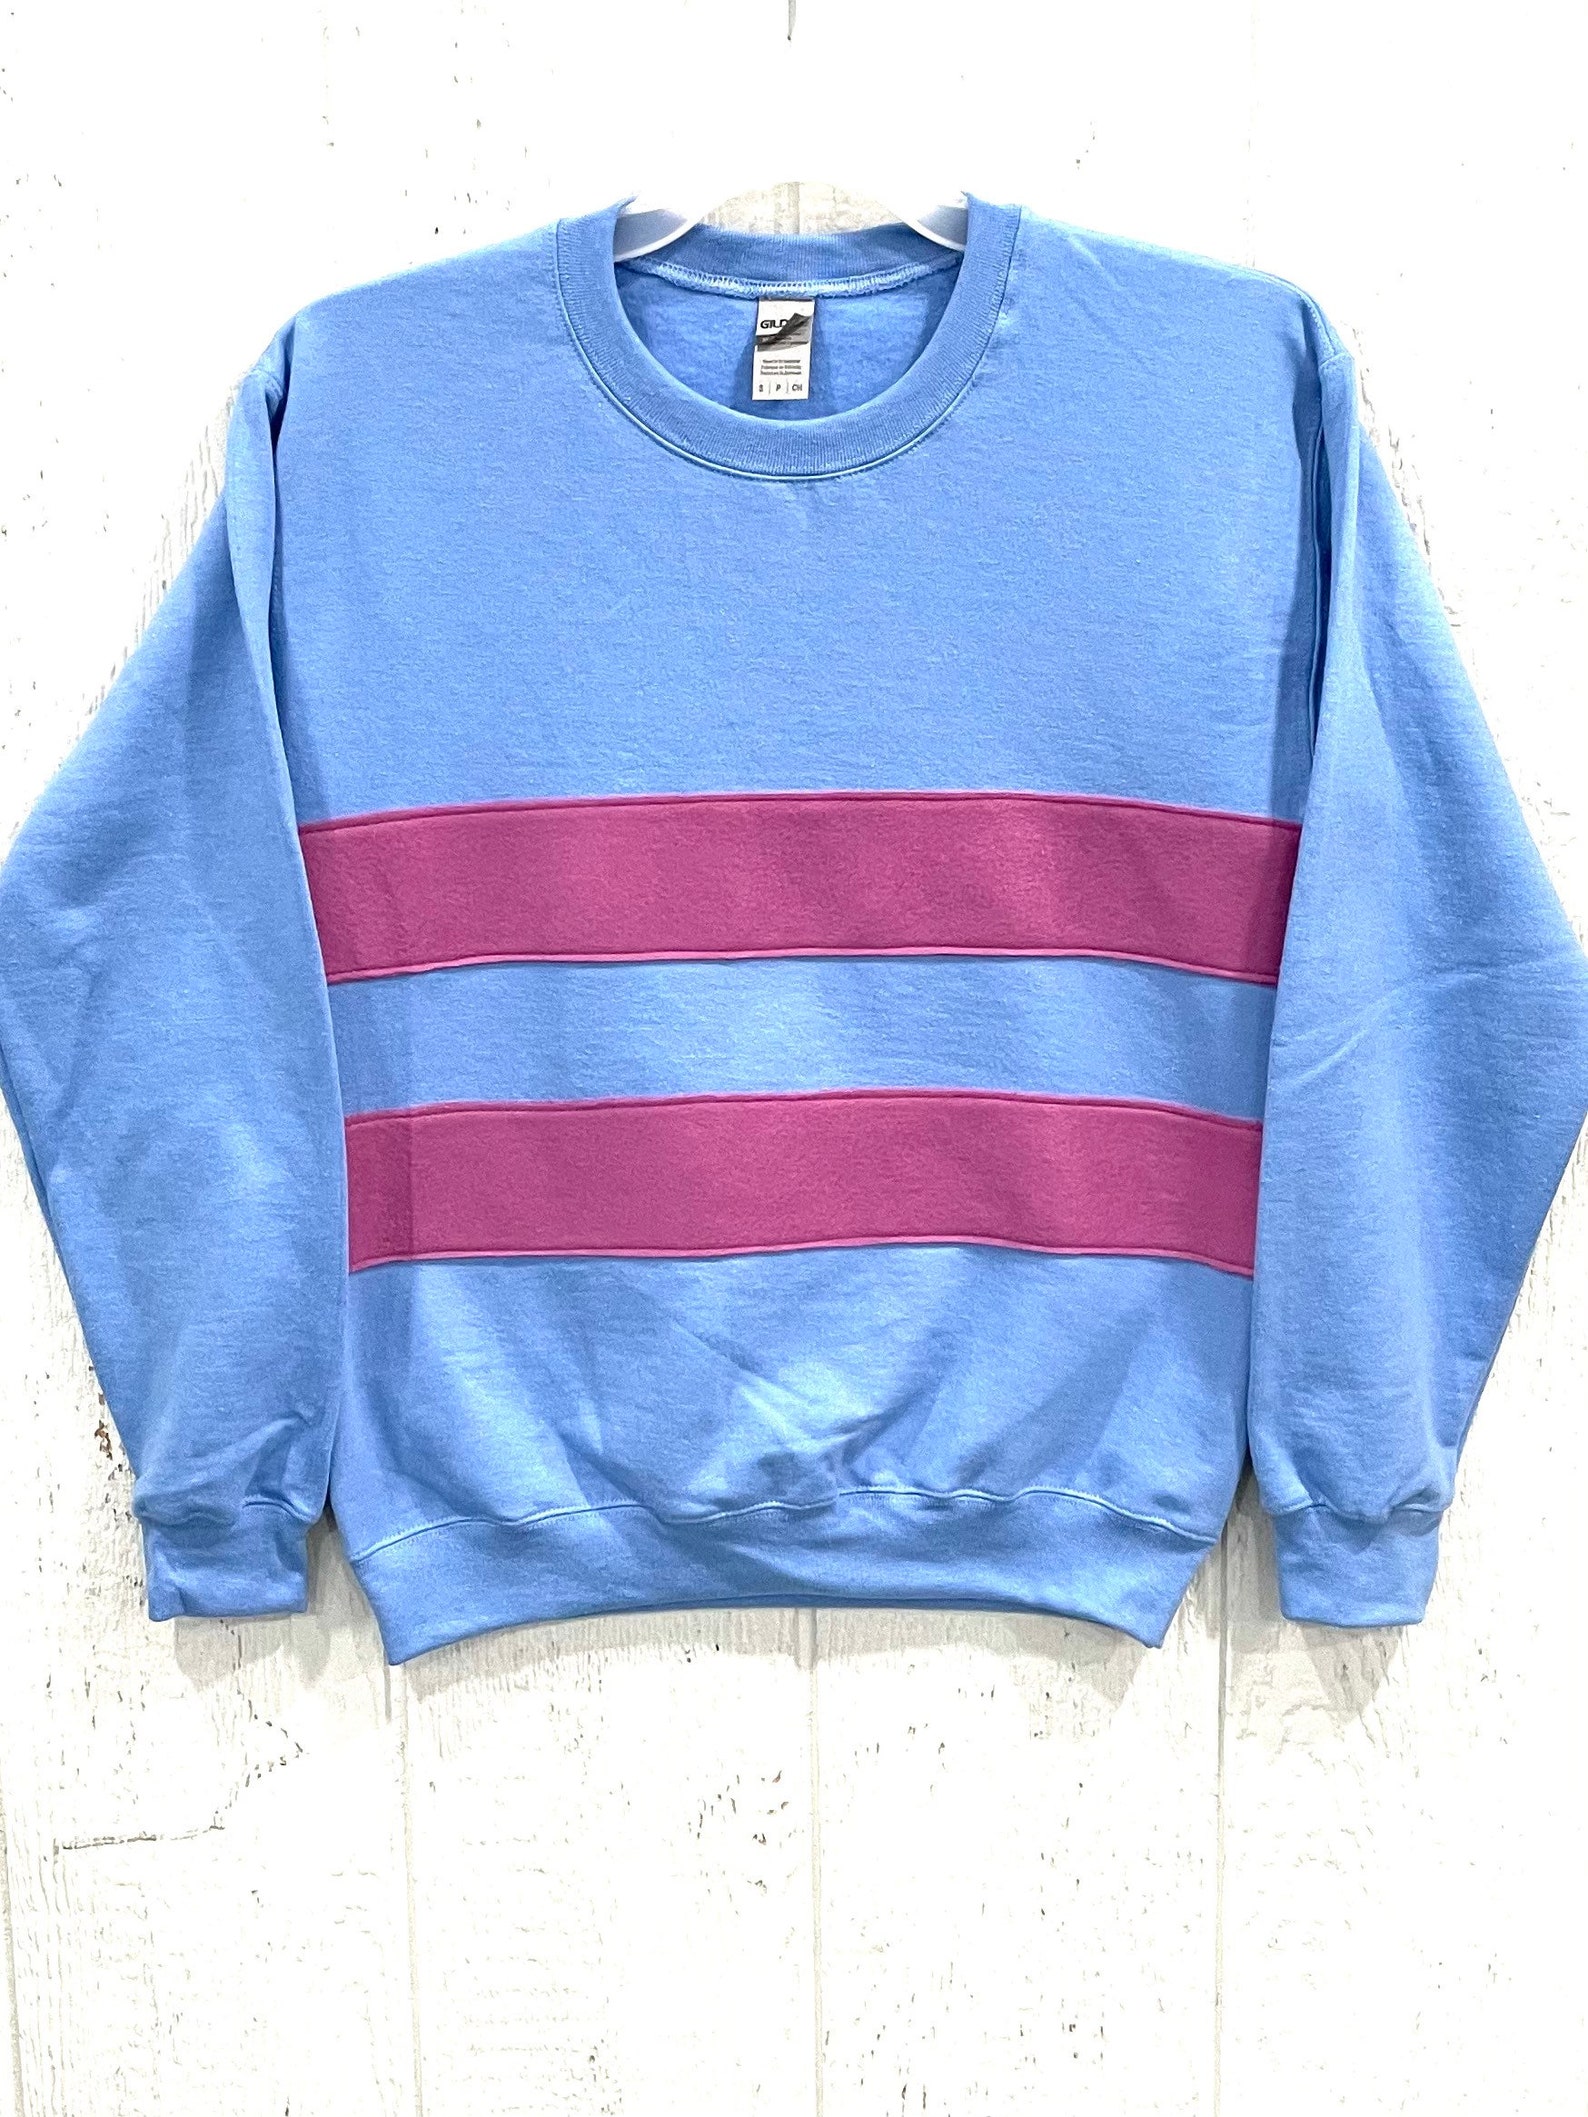 Light stripes Frisk shirt Undertale shirt Frisk sweatshirt | Etsy